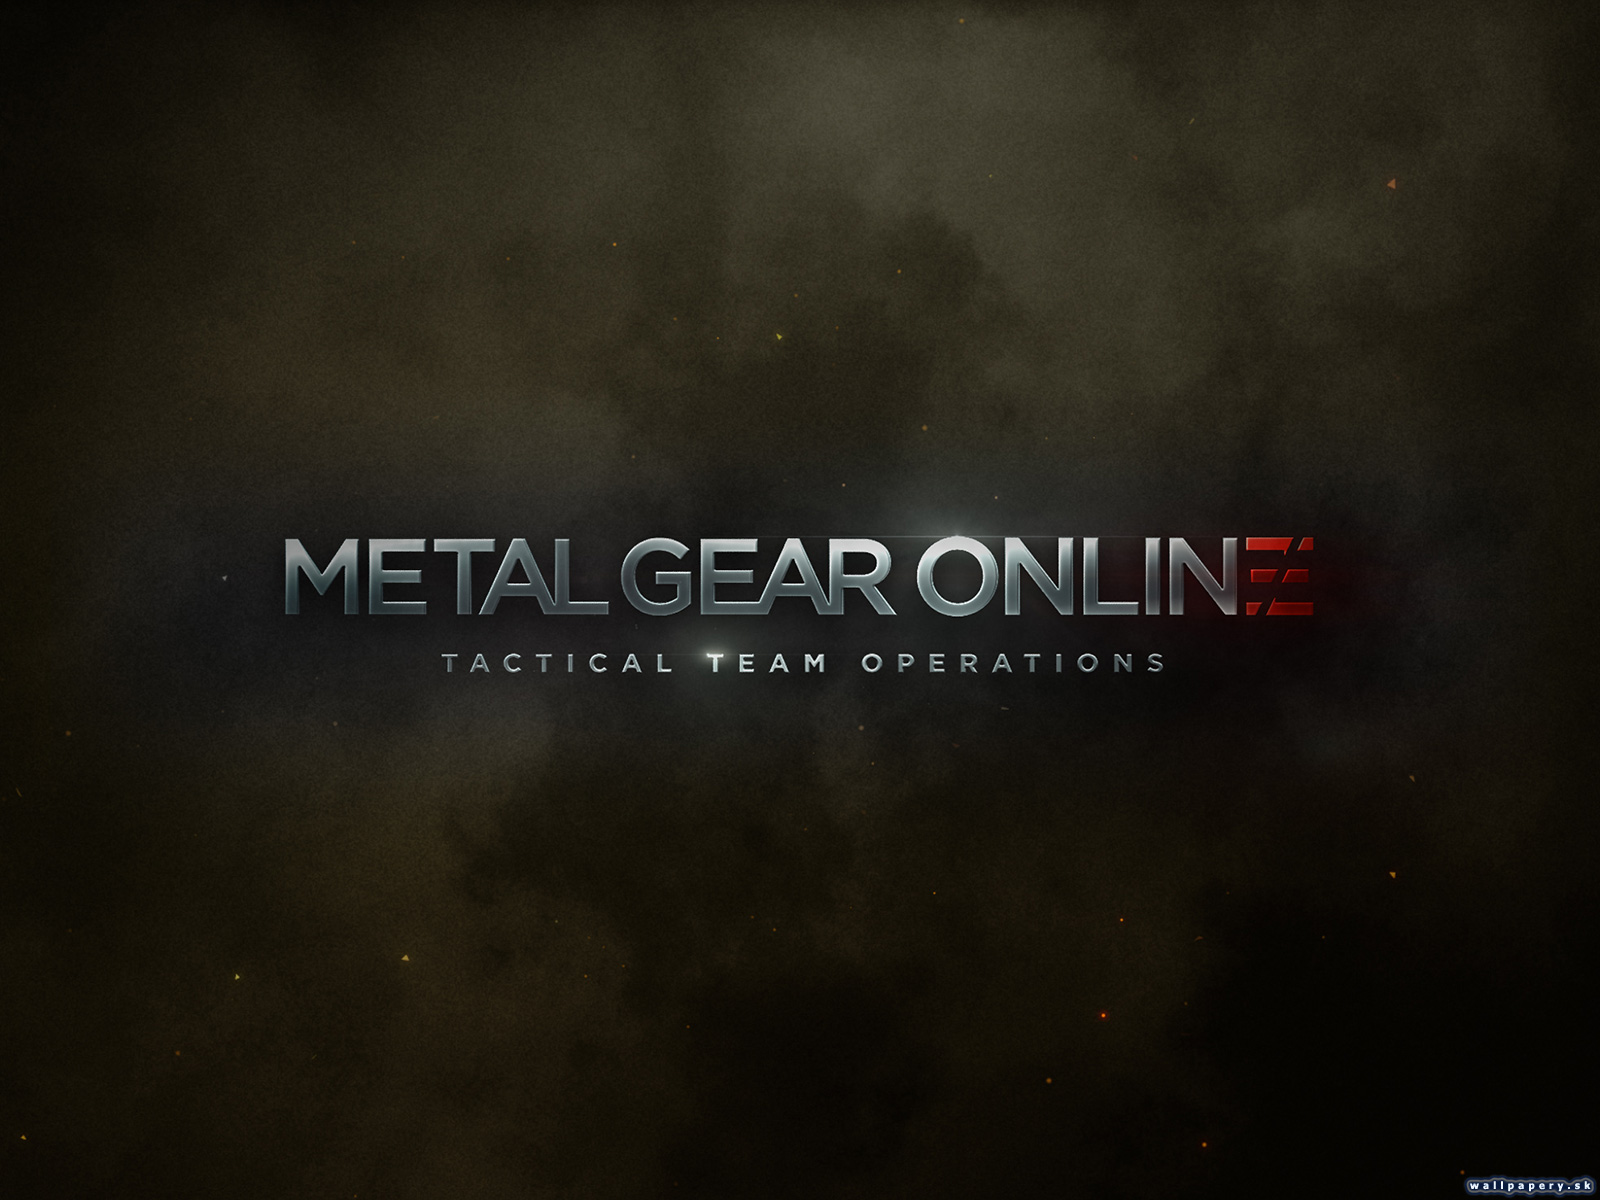 Metal Gear Online 3 - wallpaper 2